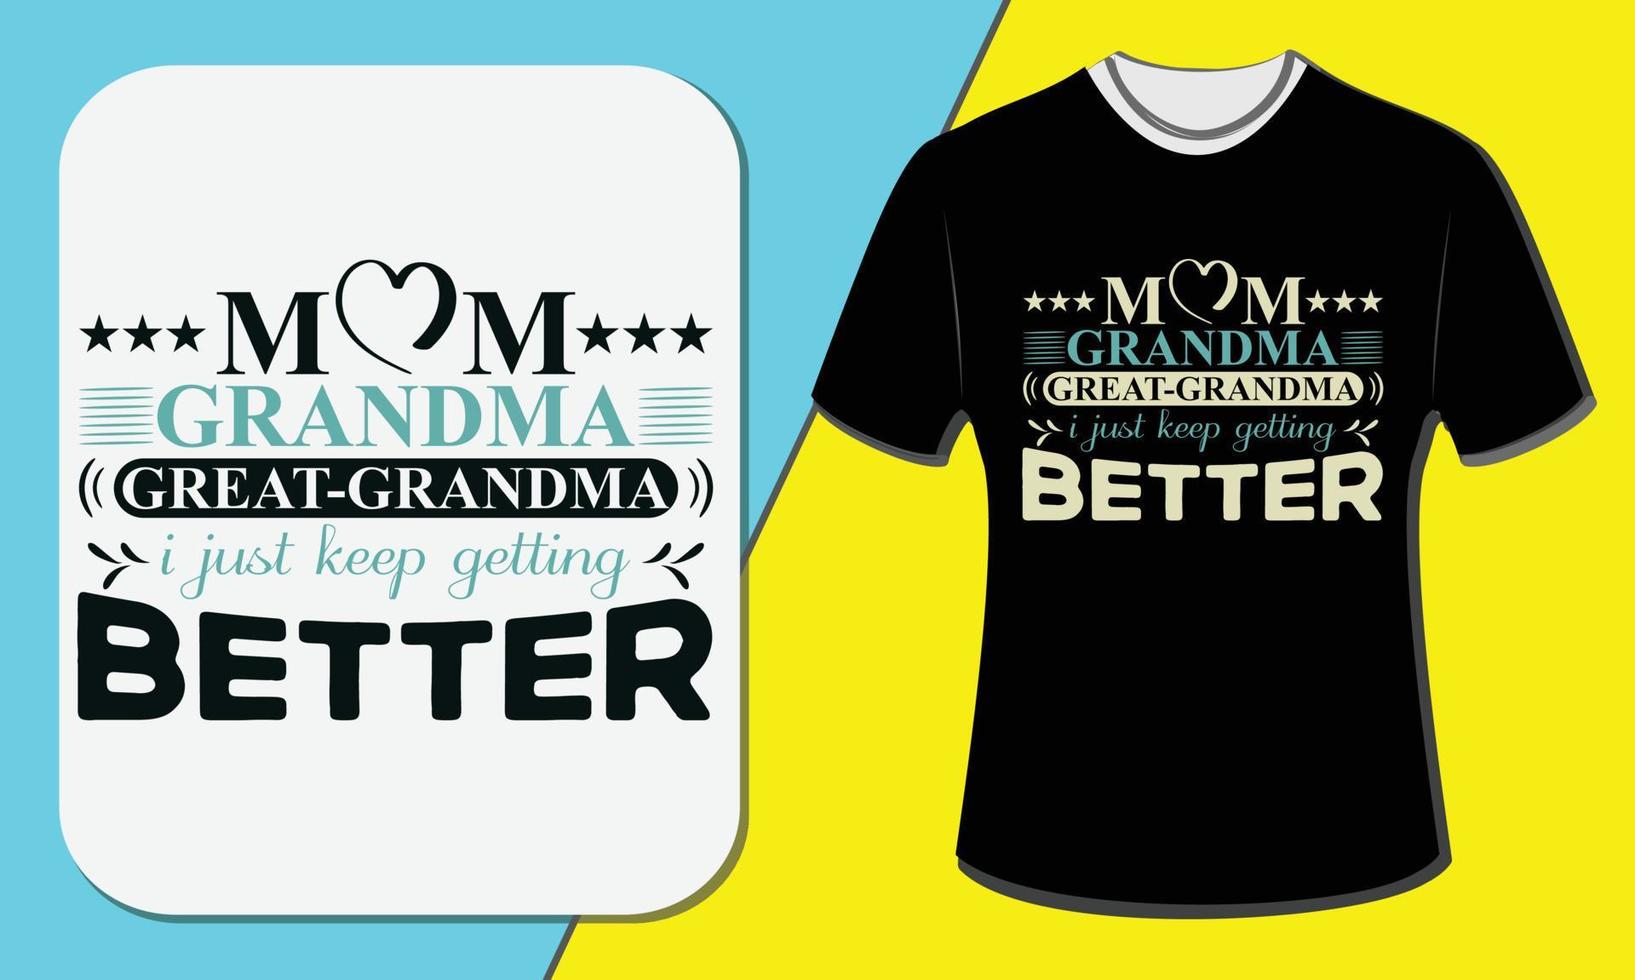 Mom grandma great grandma i just keep getting better, grandparents day t-shirt design vector